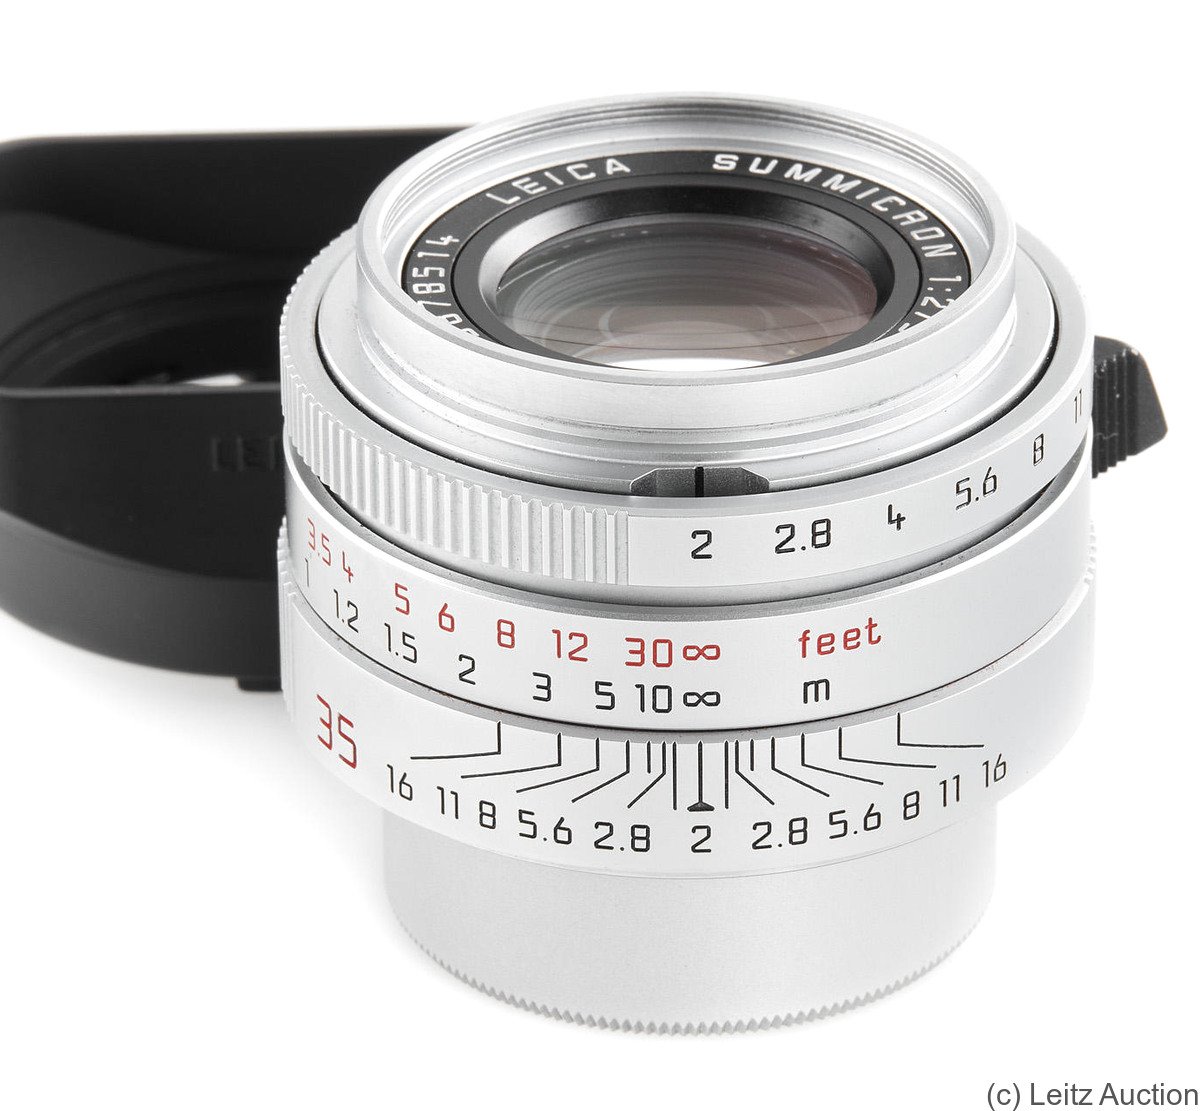 Leitz: 35mm (3.5cm) f2 Summicron (SM, chrome, aspherical) camera